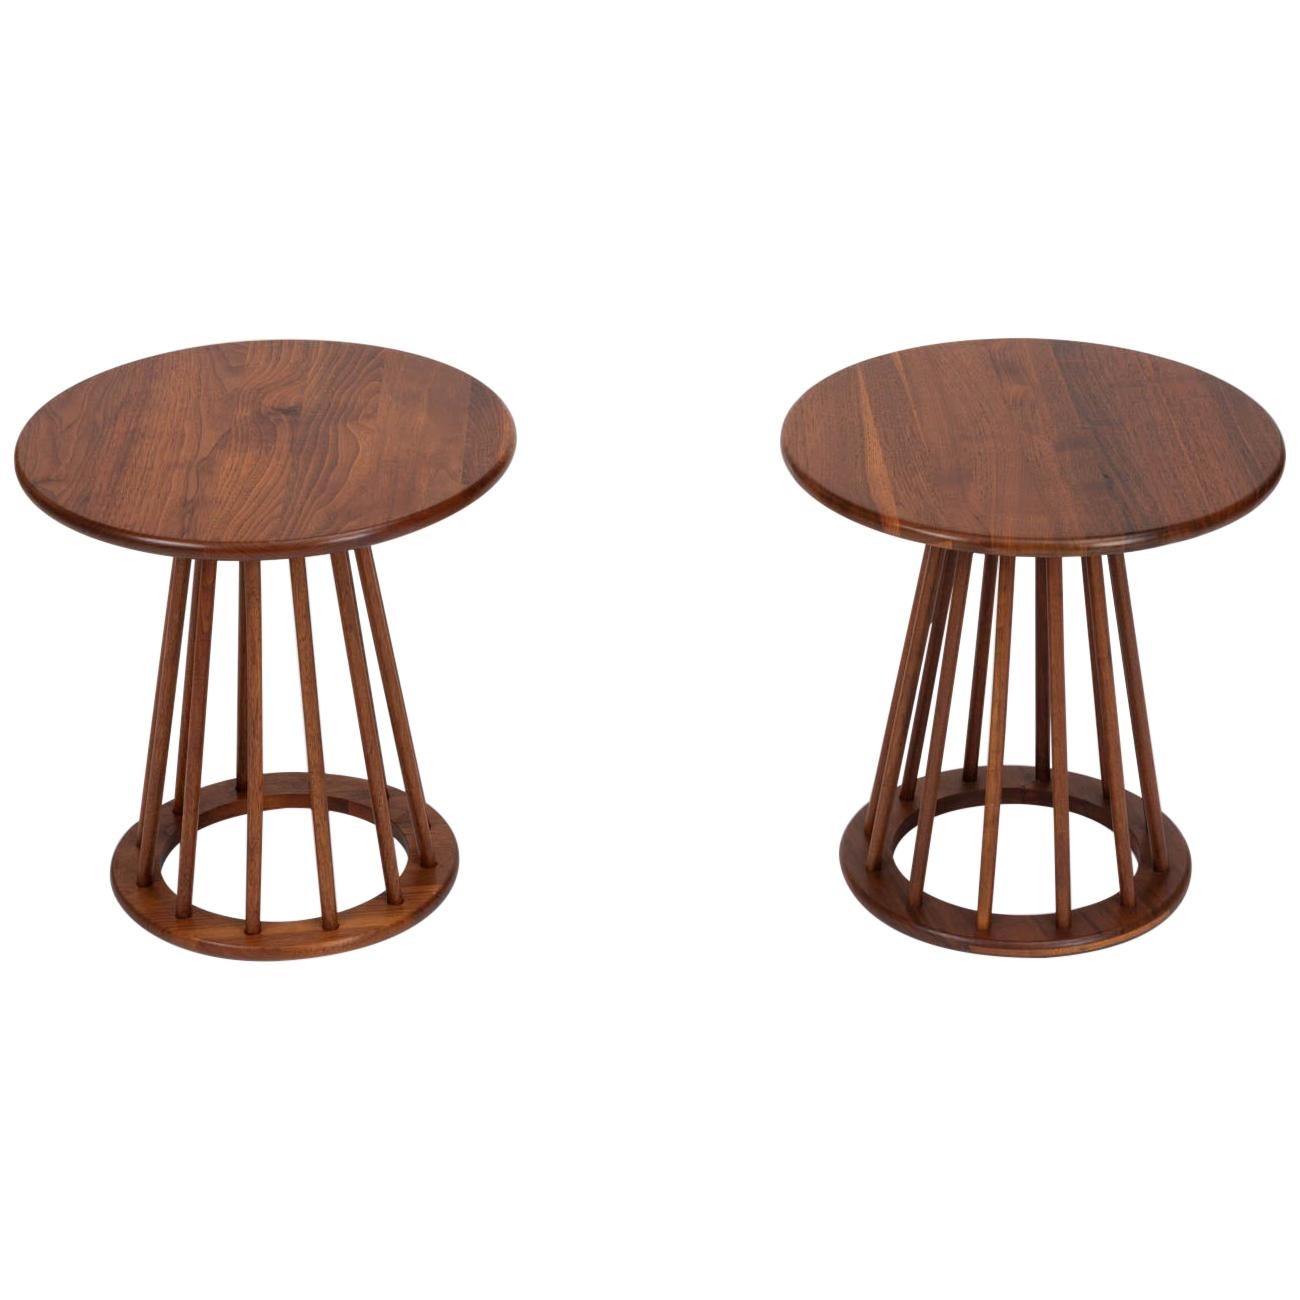 Pair of Round Walnut Side Tables by Arthur Umanoff for Washington Woodcraft